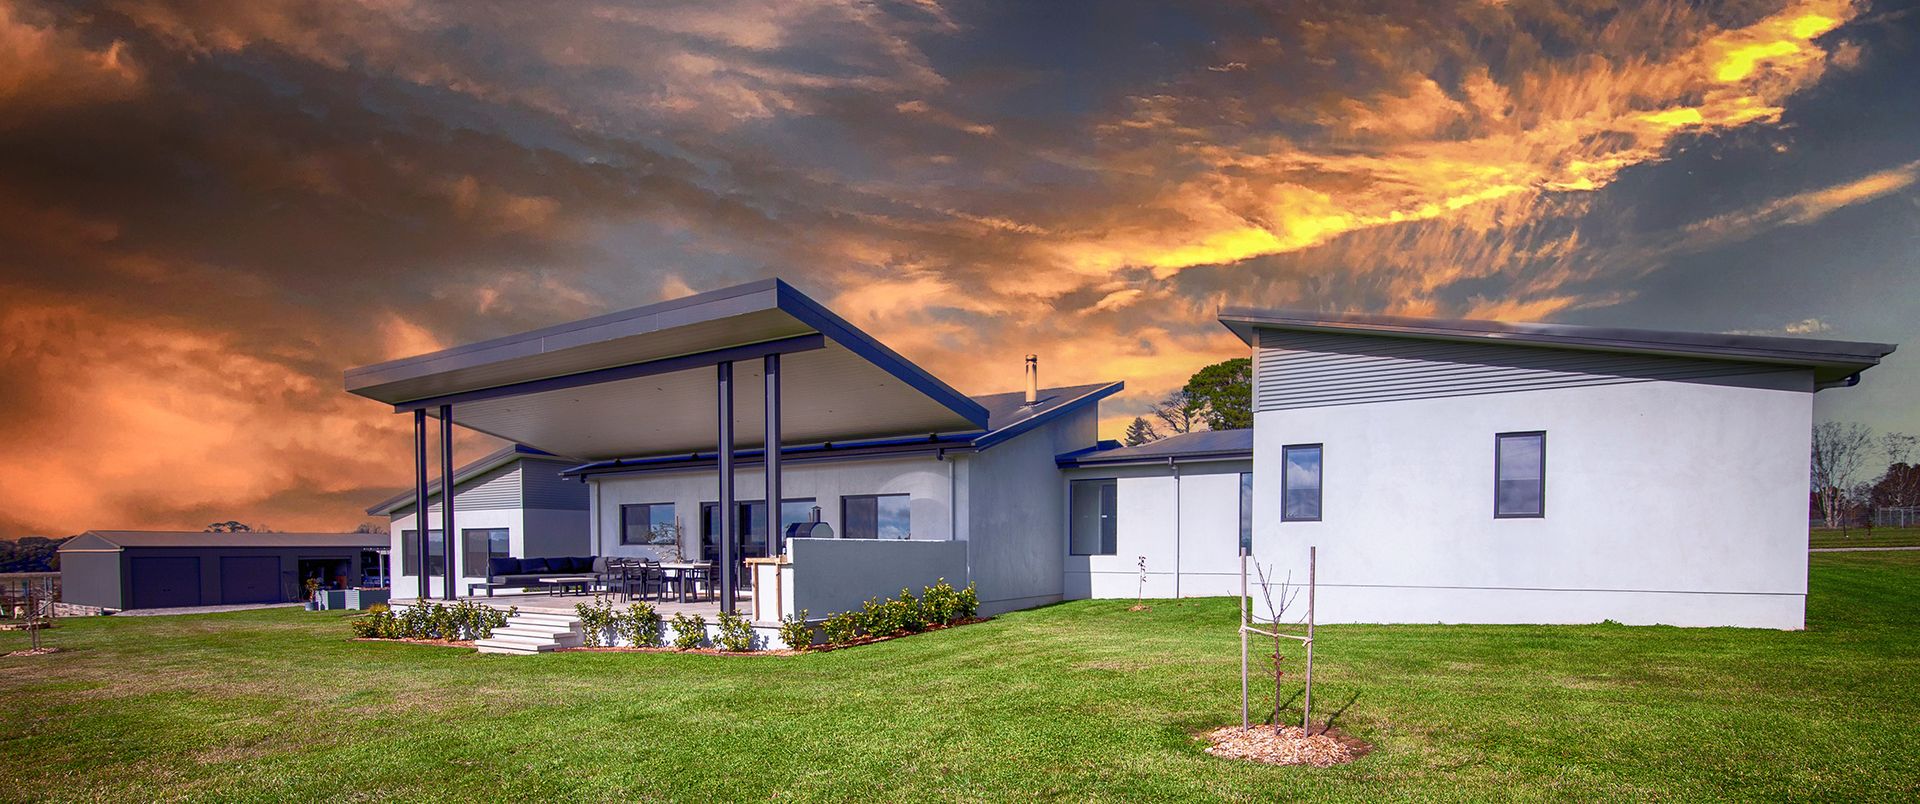 5 bedrooms House in 14 Grabben Gullen Road CROOKWELL NSW, 2583